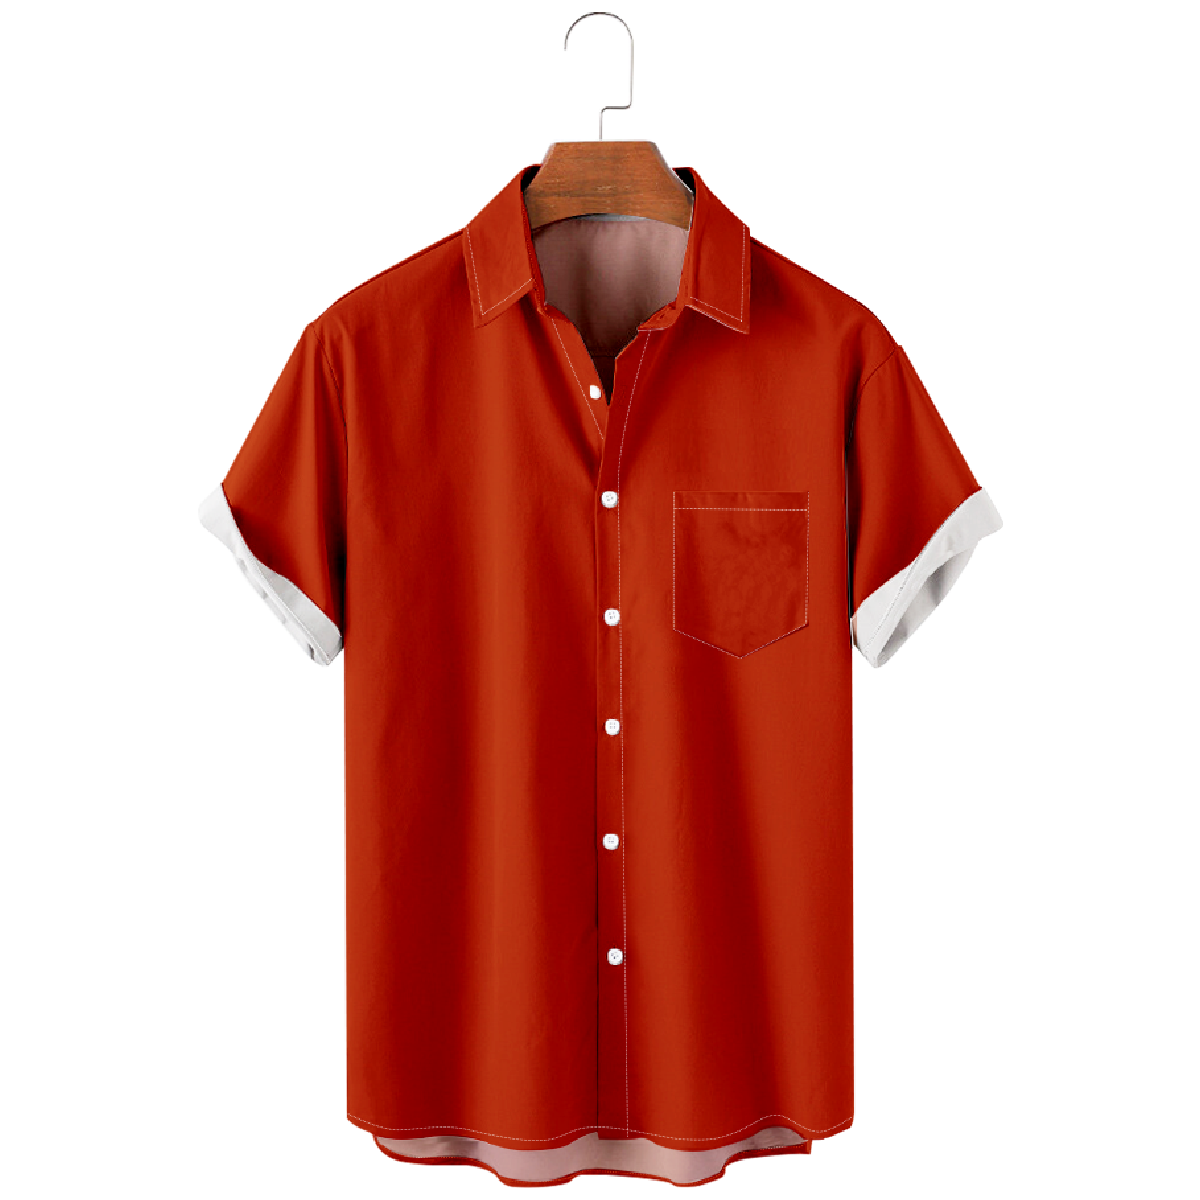 Chicago Orange Button Up Shirt for Men Shirt with Front Pocket Short Sleeve